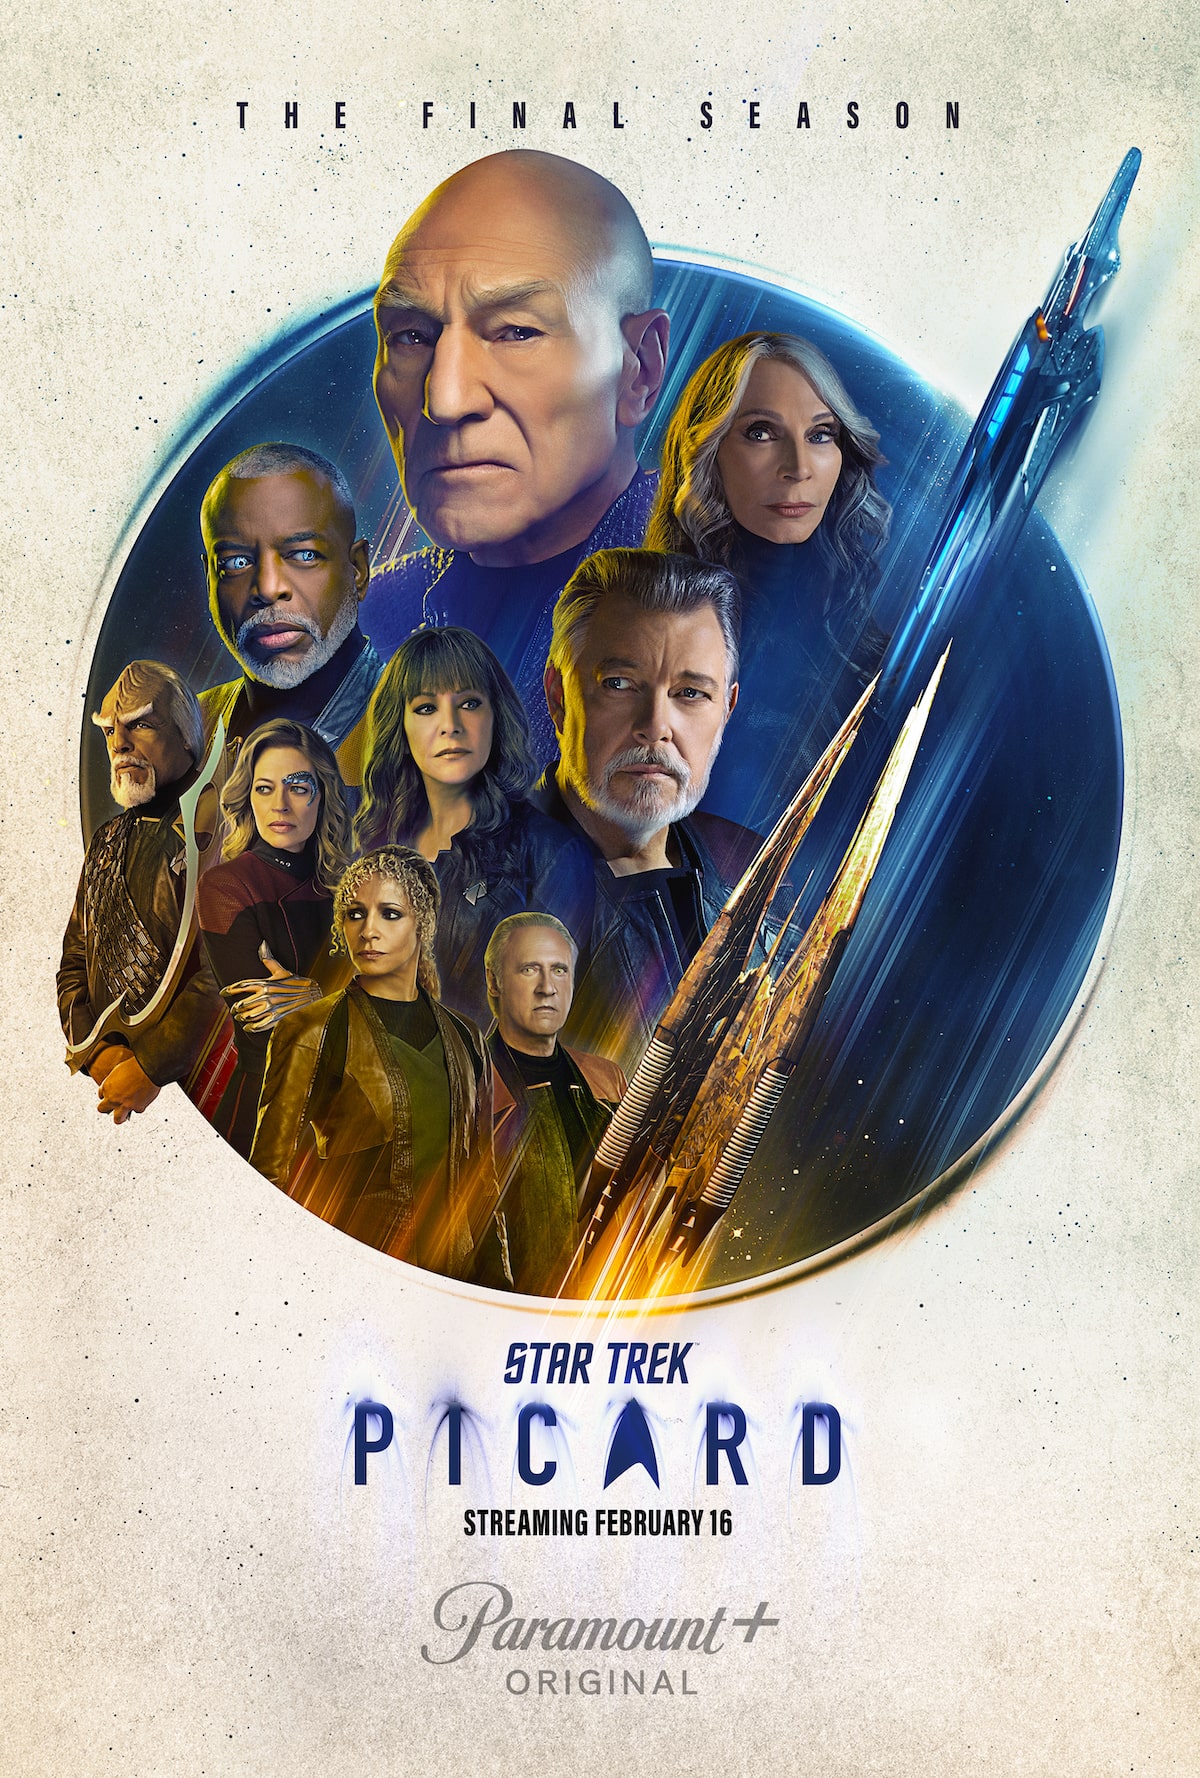 Picard season 3